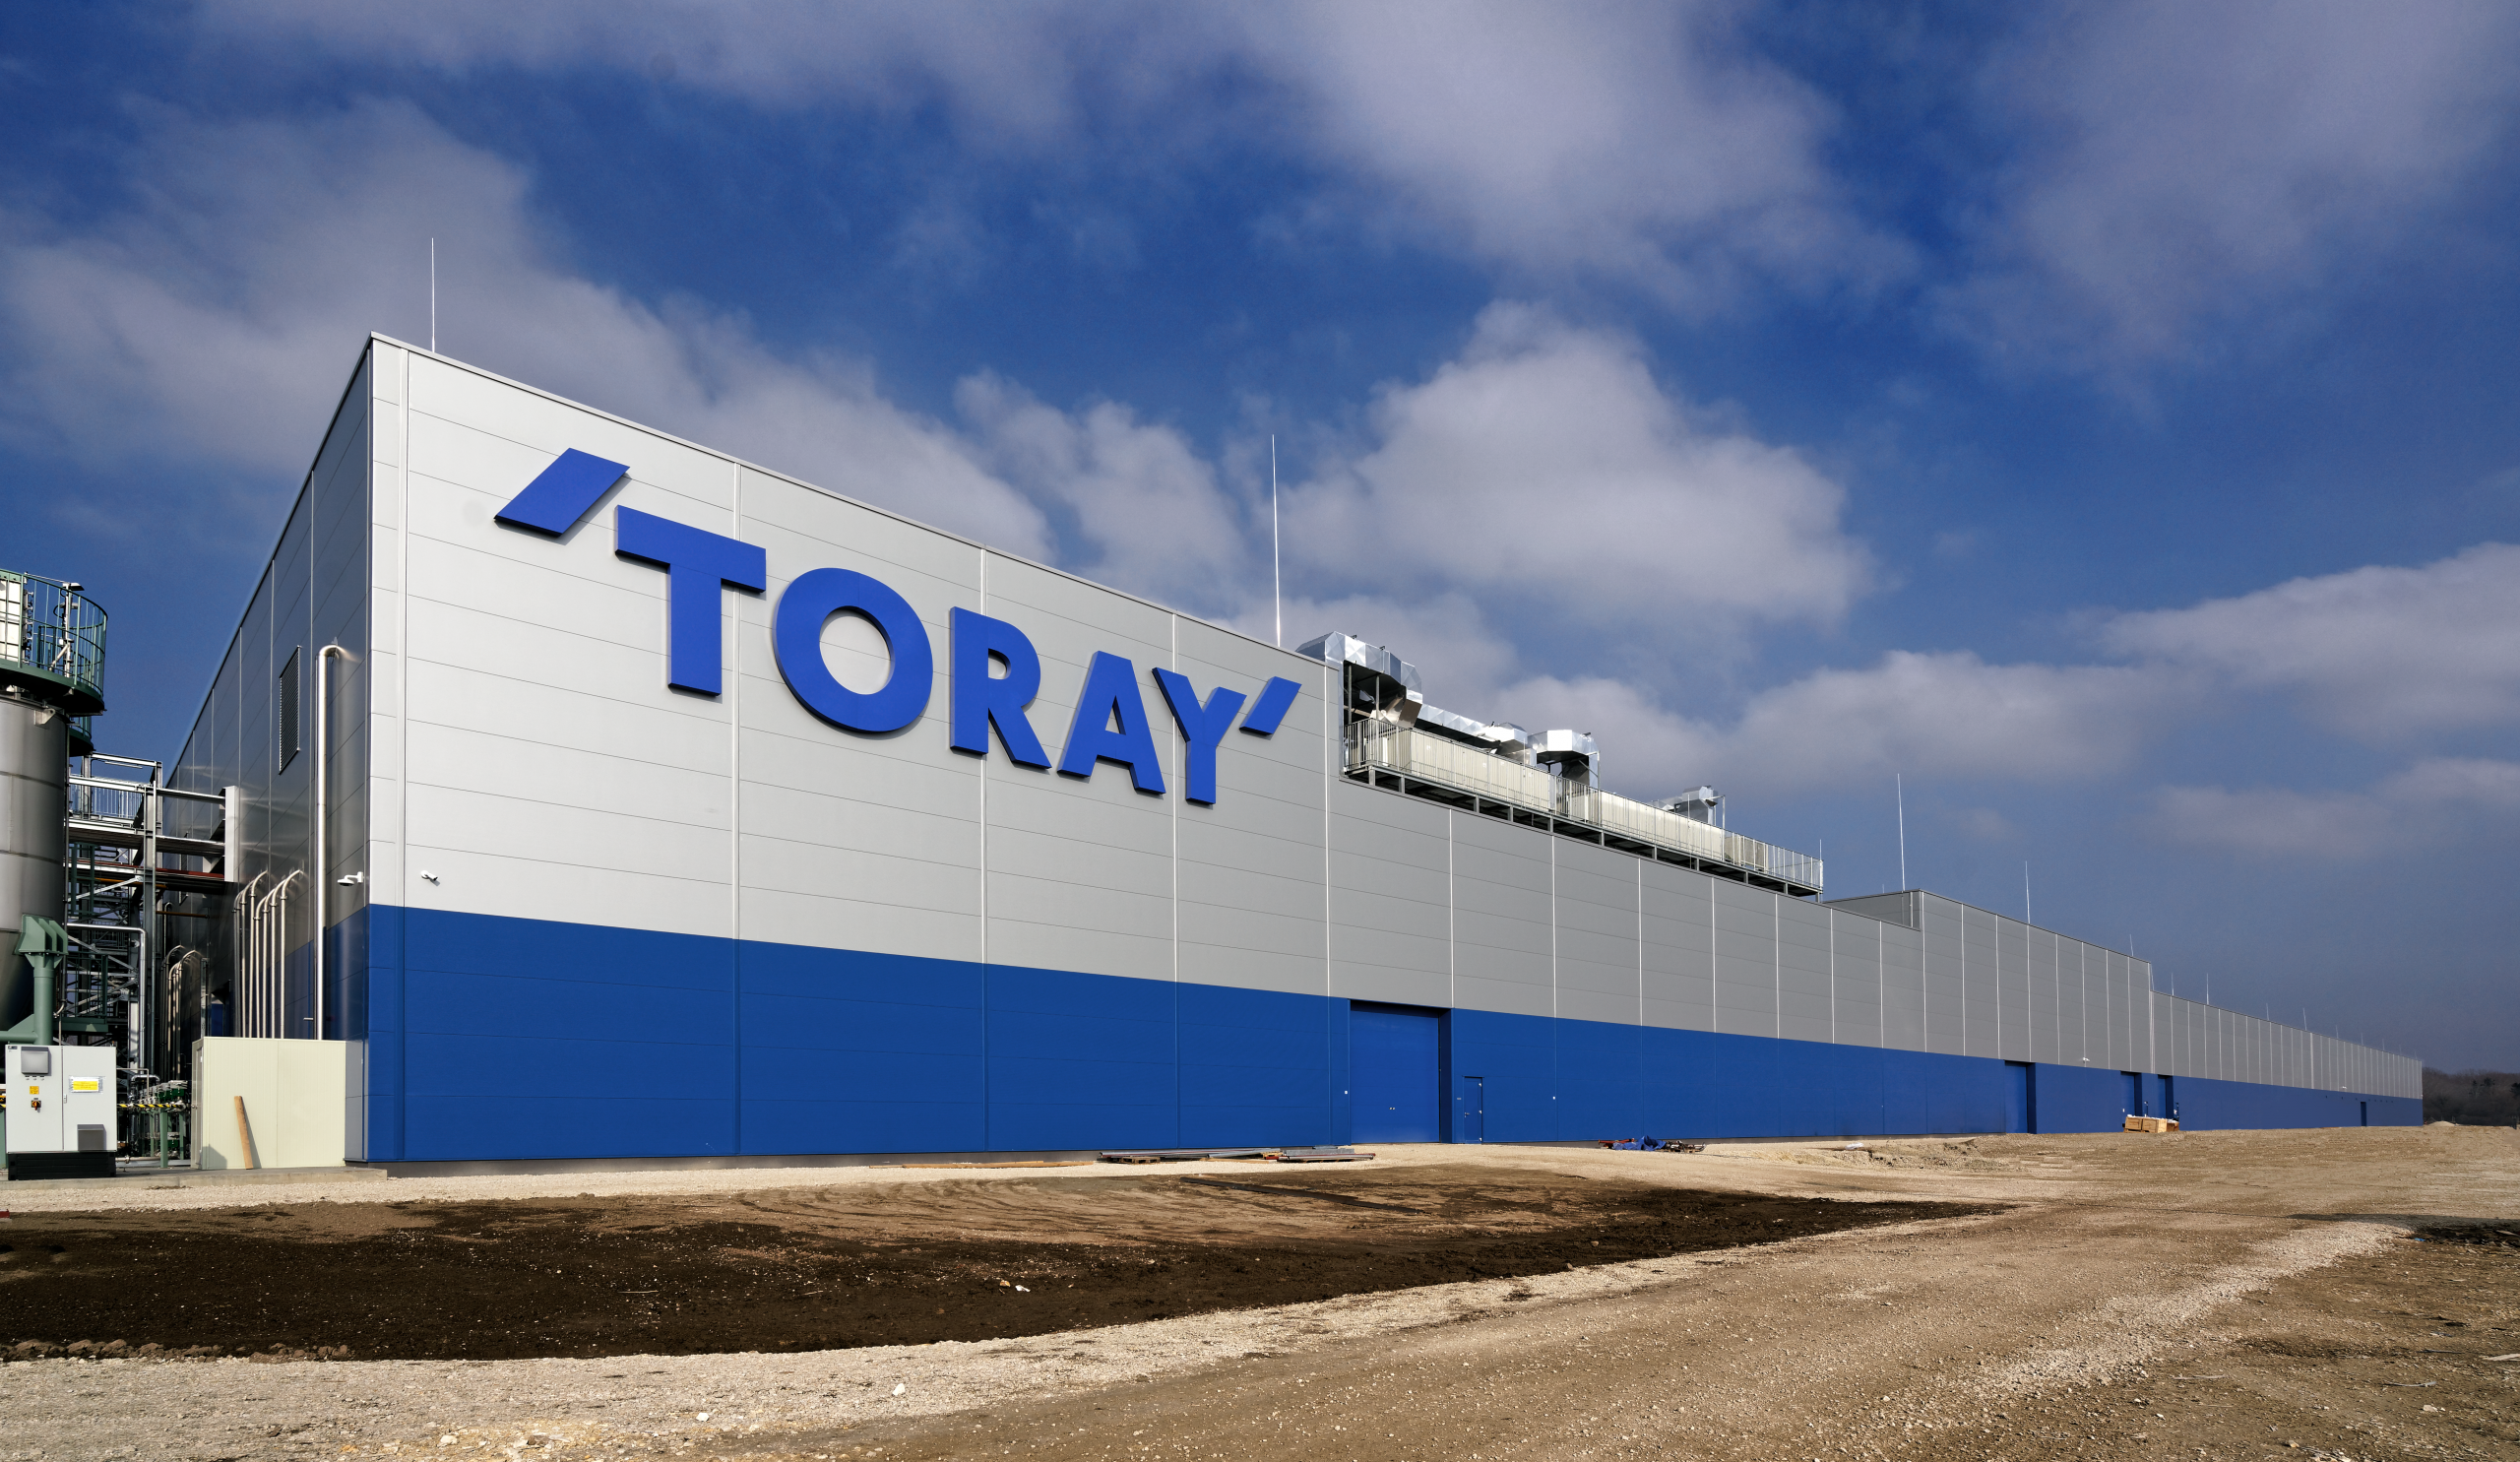 Toray factory in Nyergesújfalu, Hungary built by Takenaka Europe, 2021